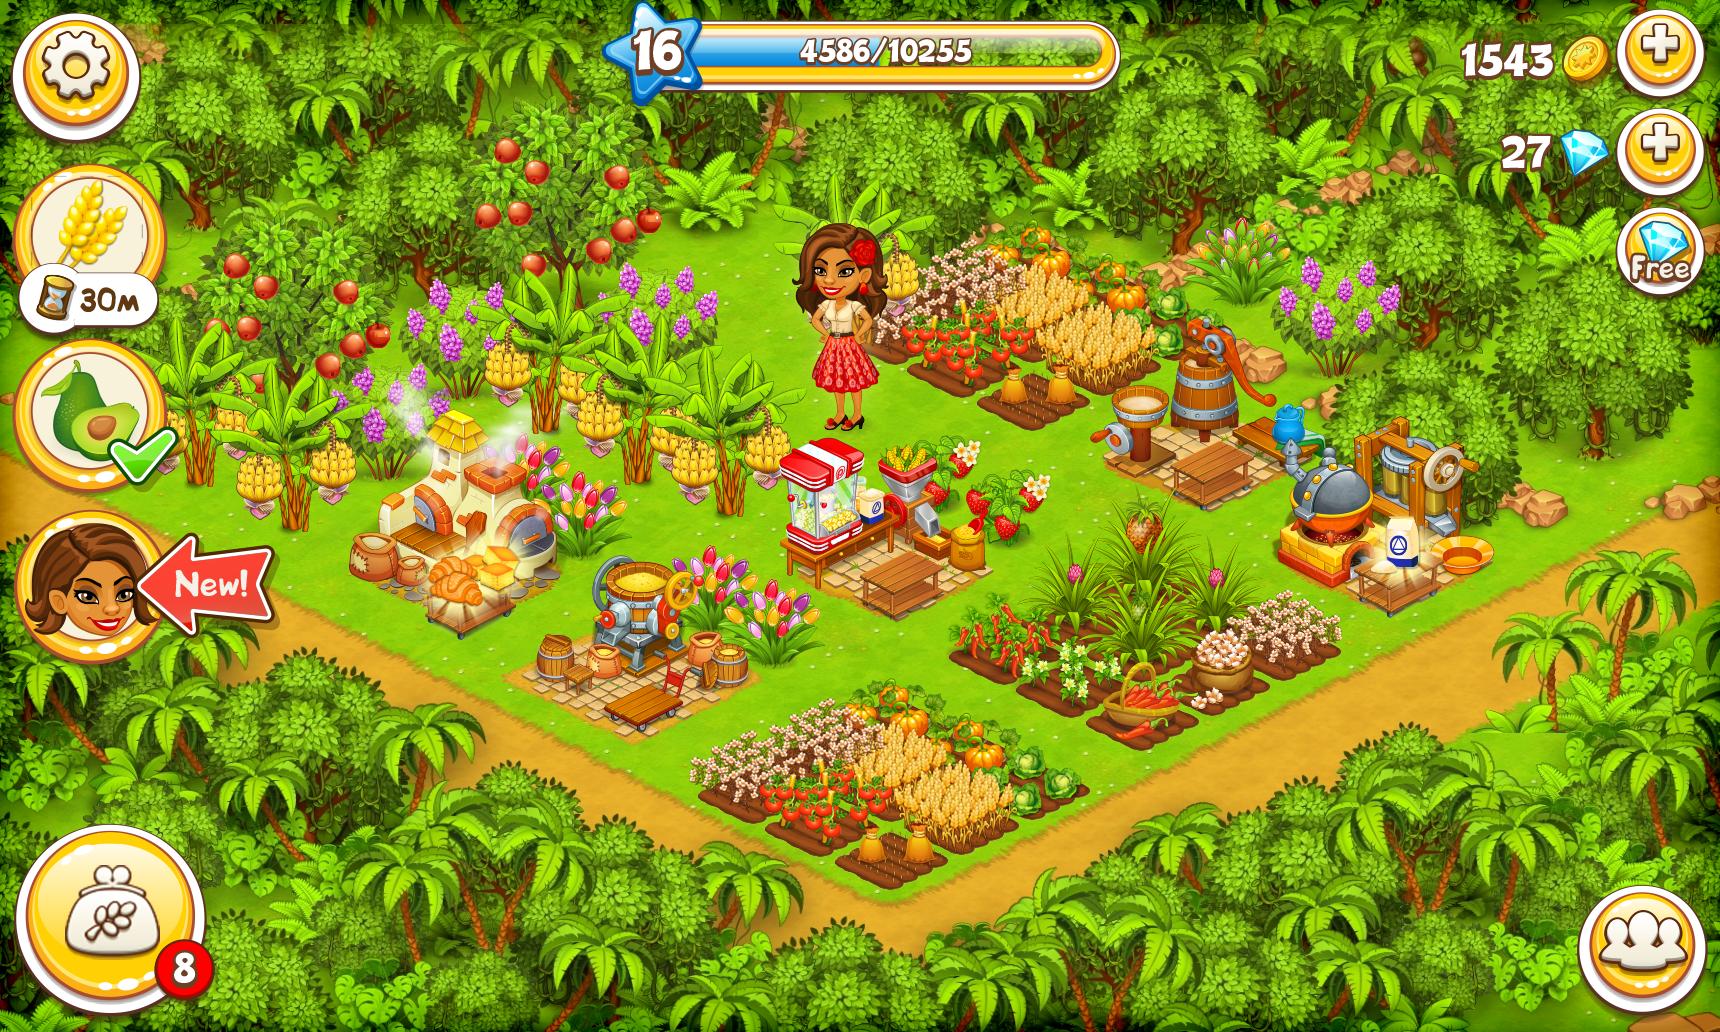 Farm Paradise Fun farm trade game at lost island 2.17 Screenshot 8